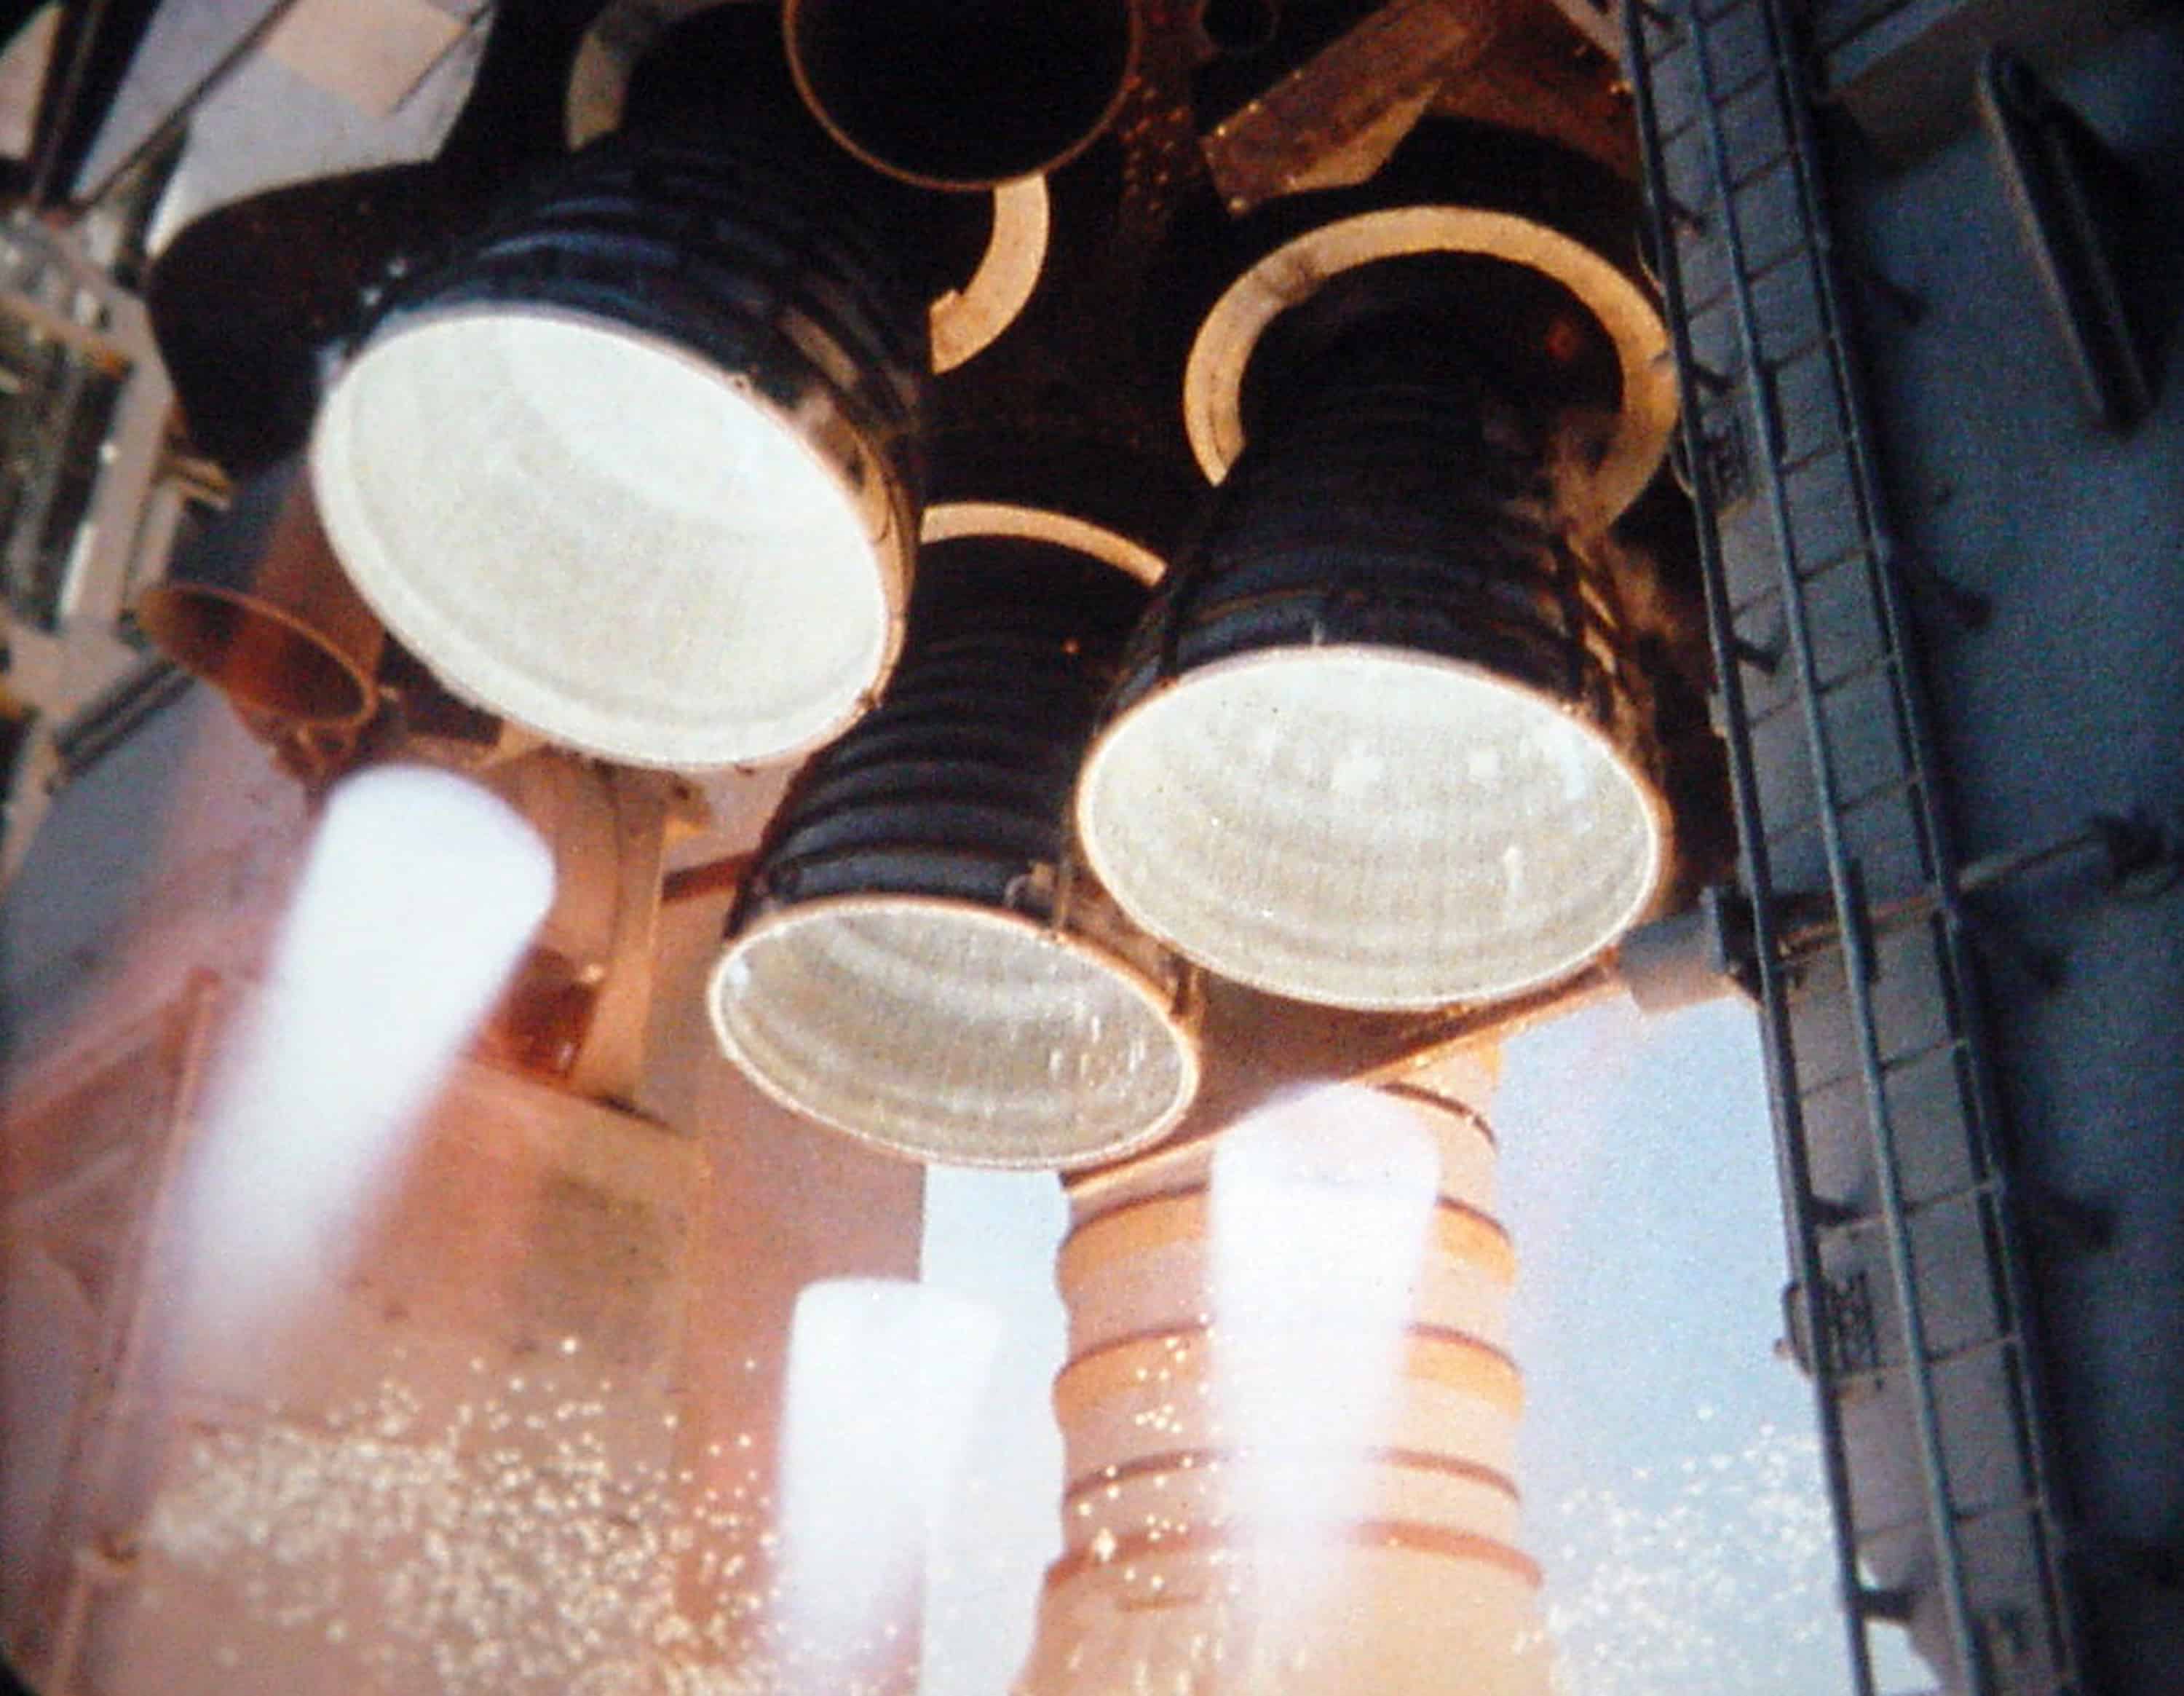 SiC nanotubes help strengthen rocket engines - The Engineer